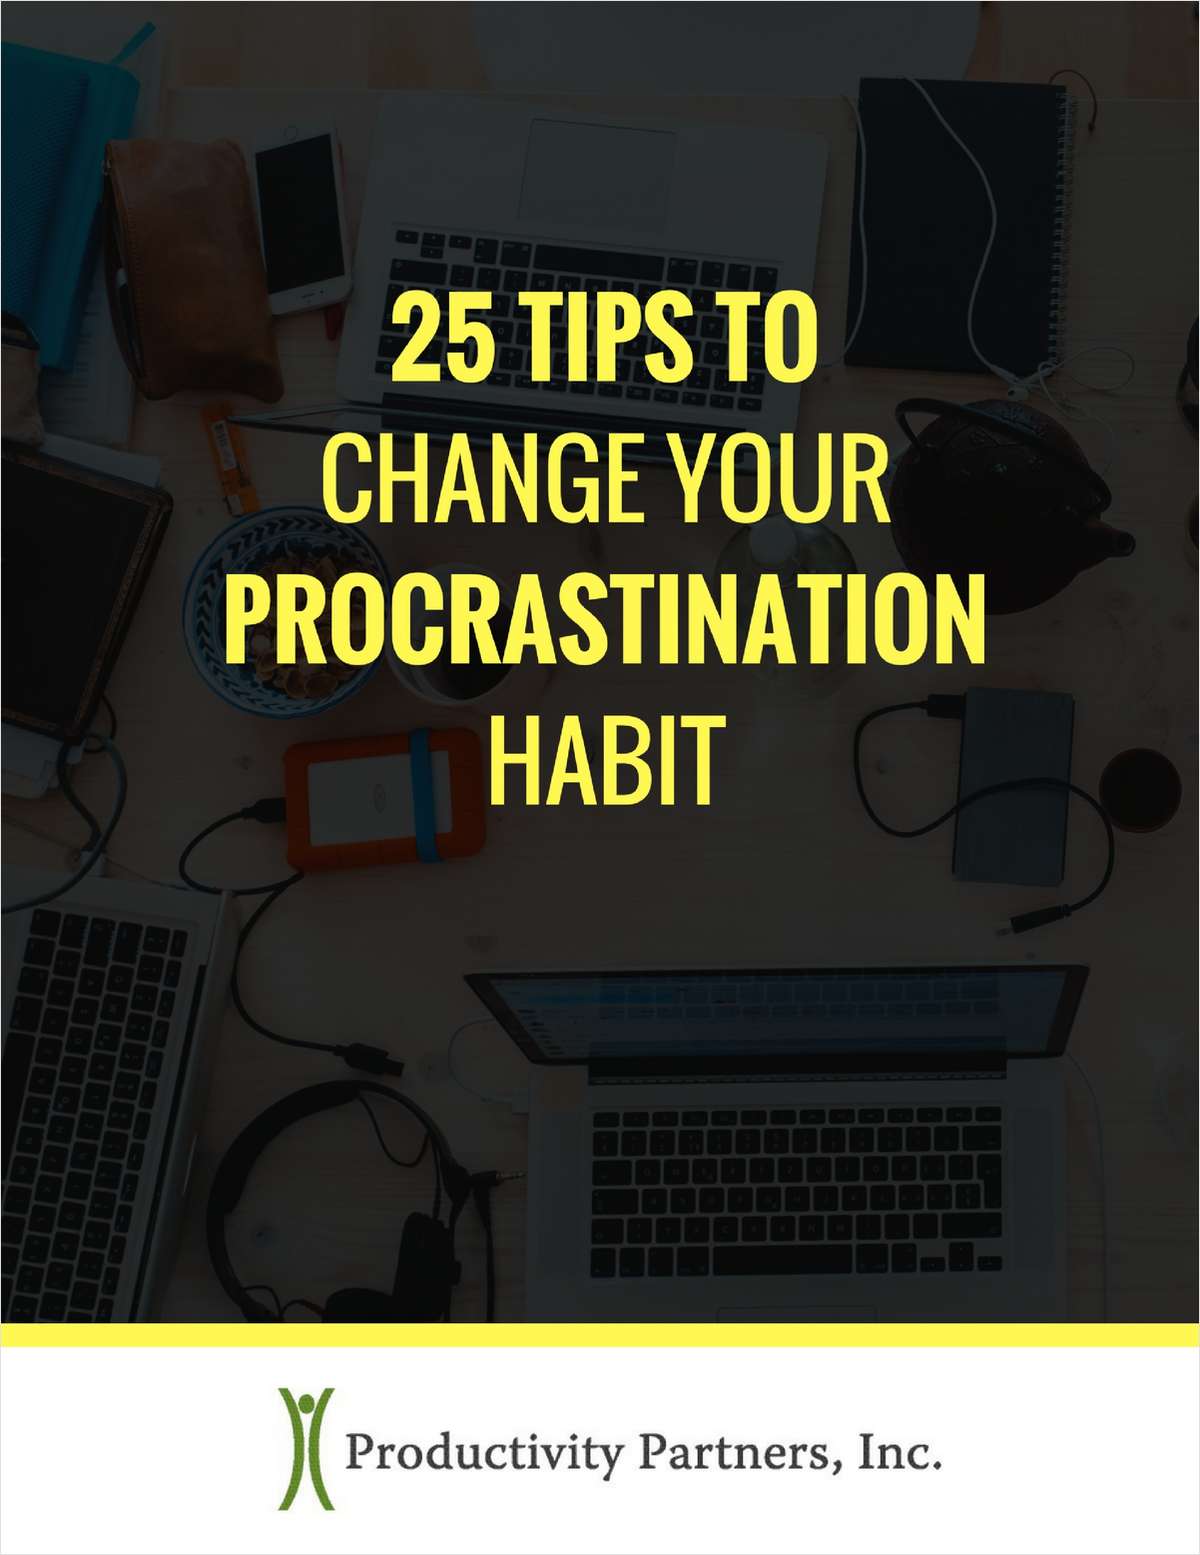 25 Tips to Change Your Procrastination Habit